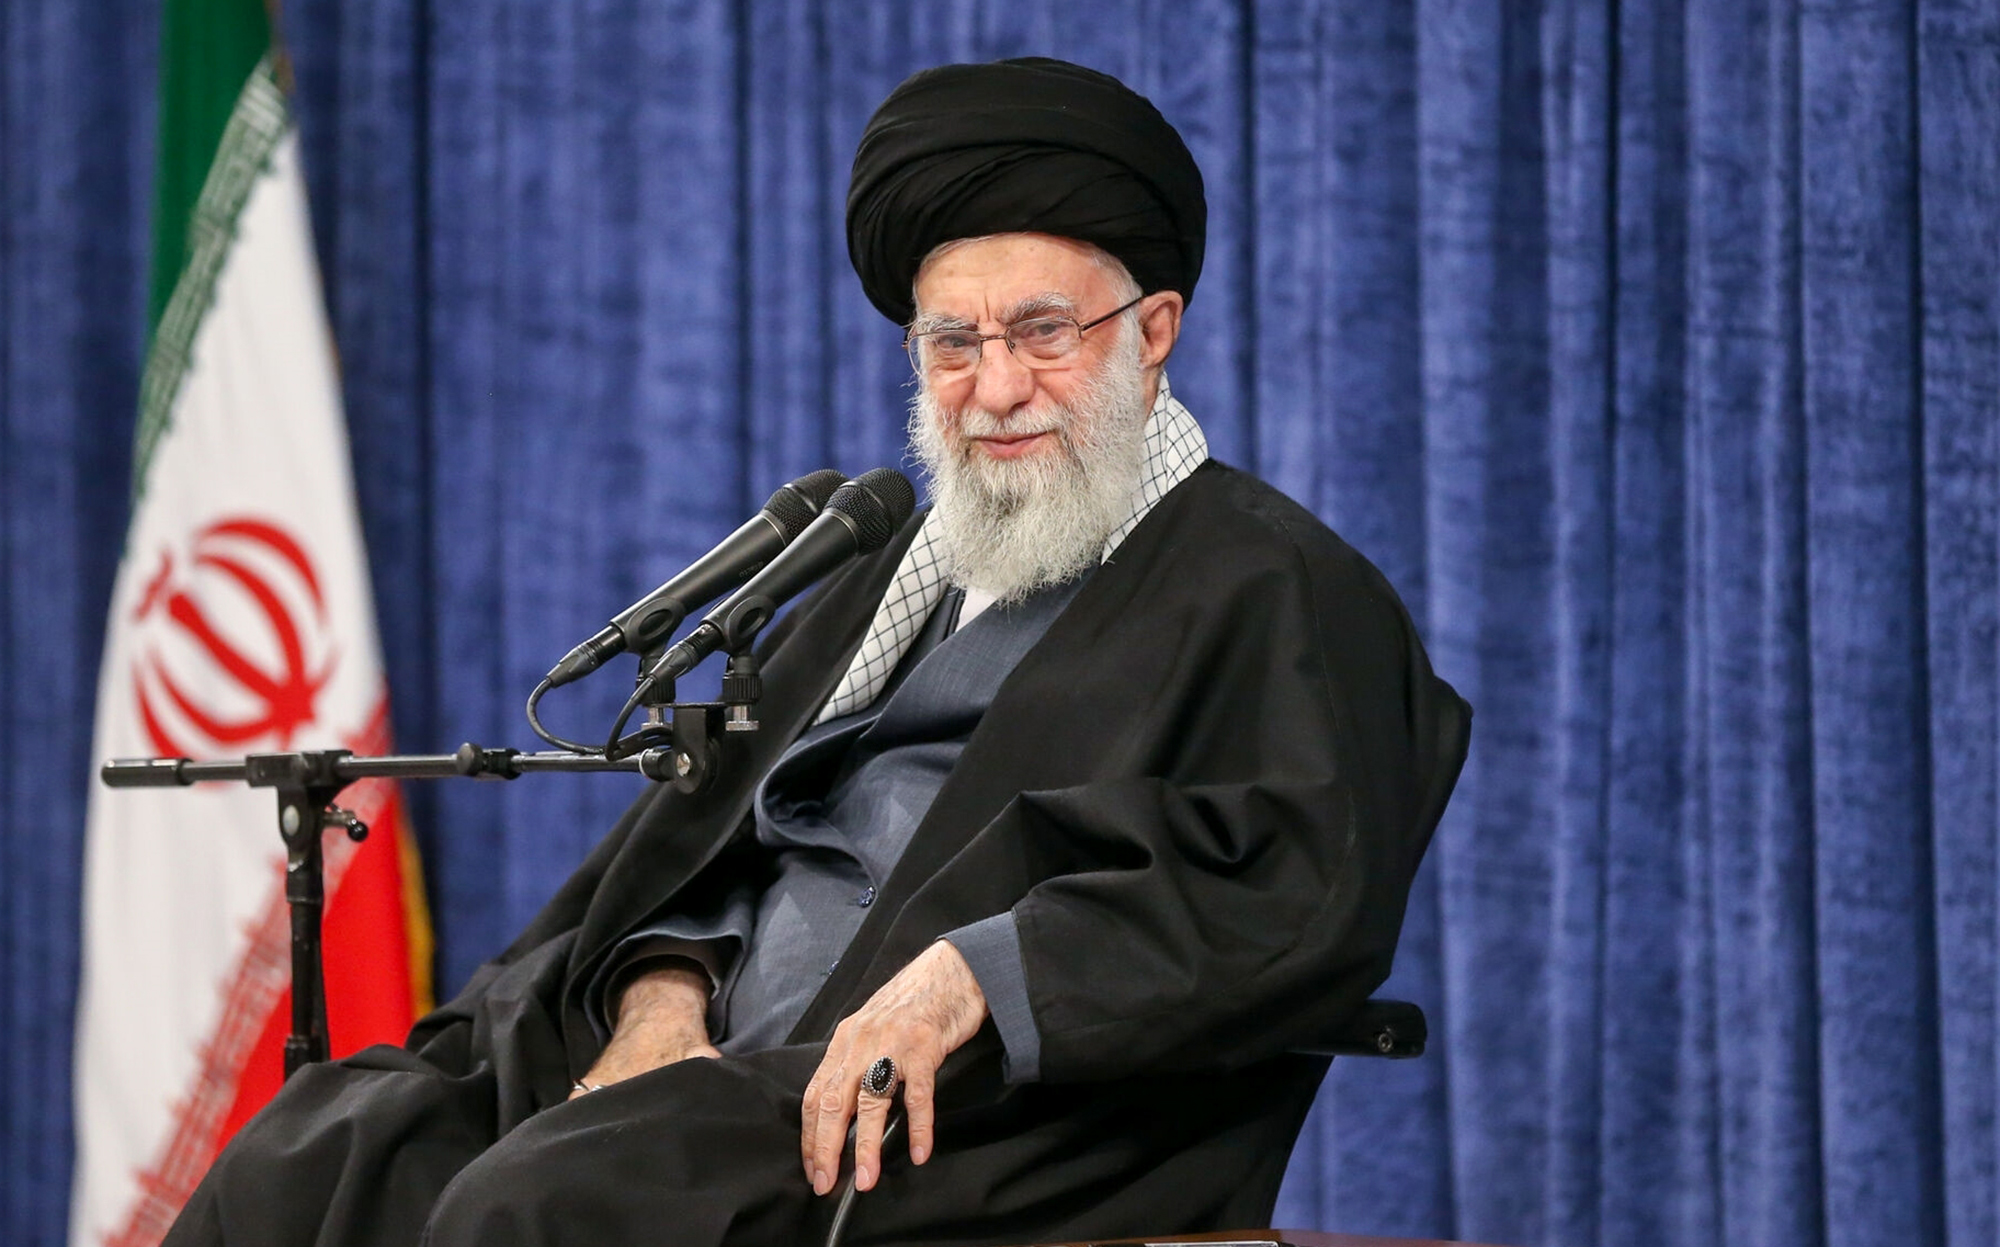 Iranian Supreme Leader Ayatollah Ali Khamenei delivers a speech in Tehran, Iran on April 3, 2022.